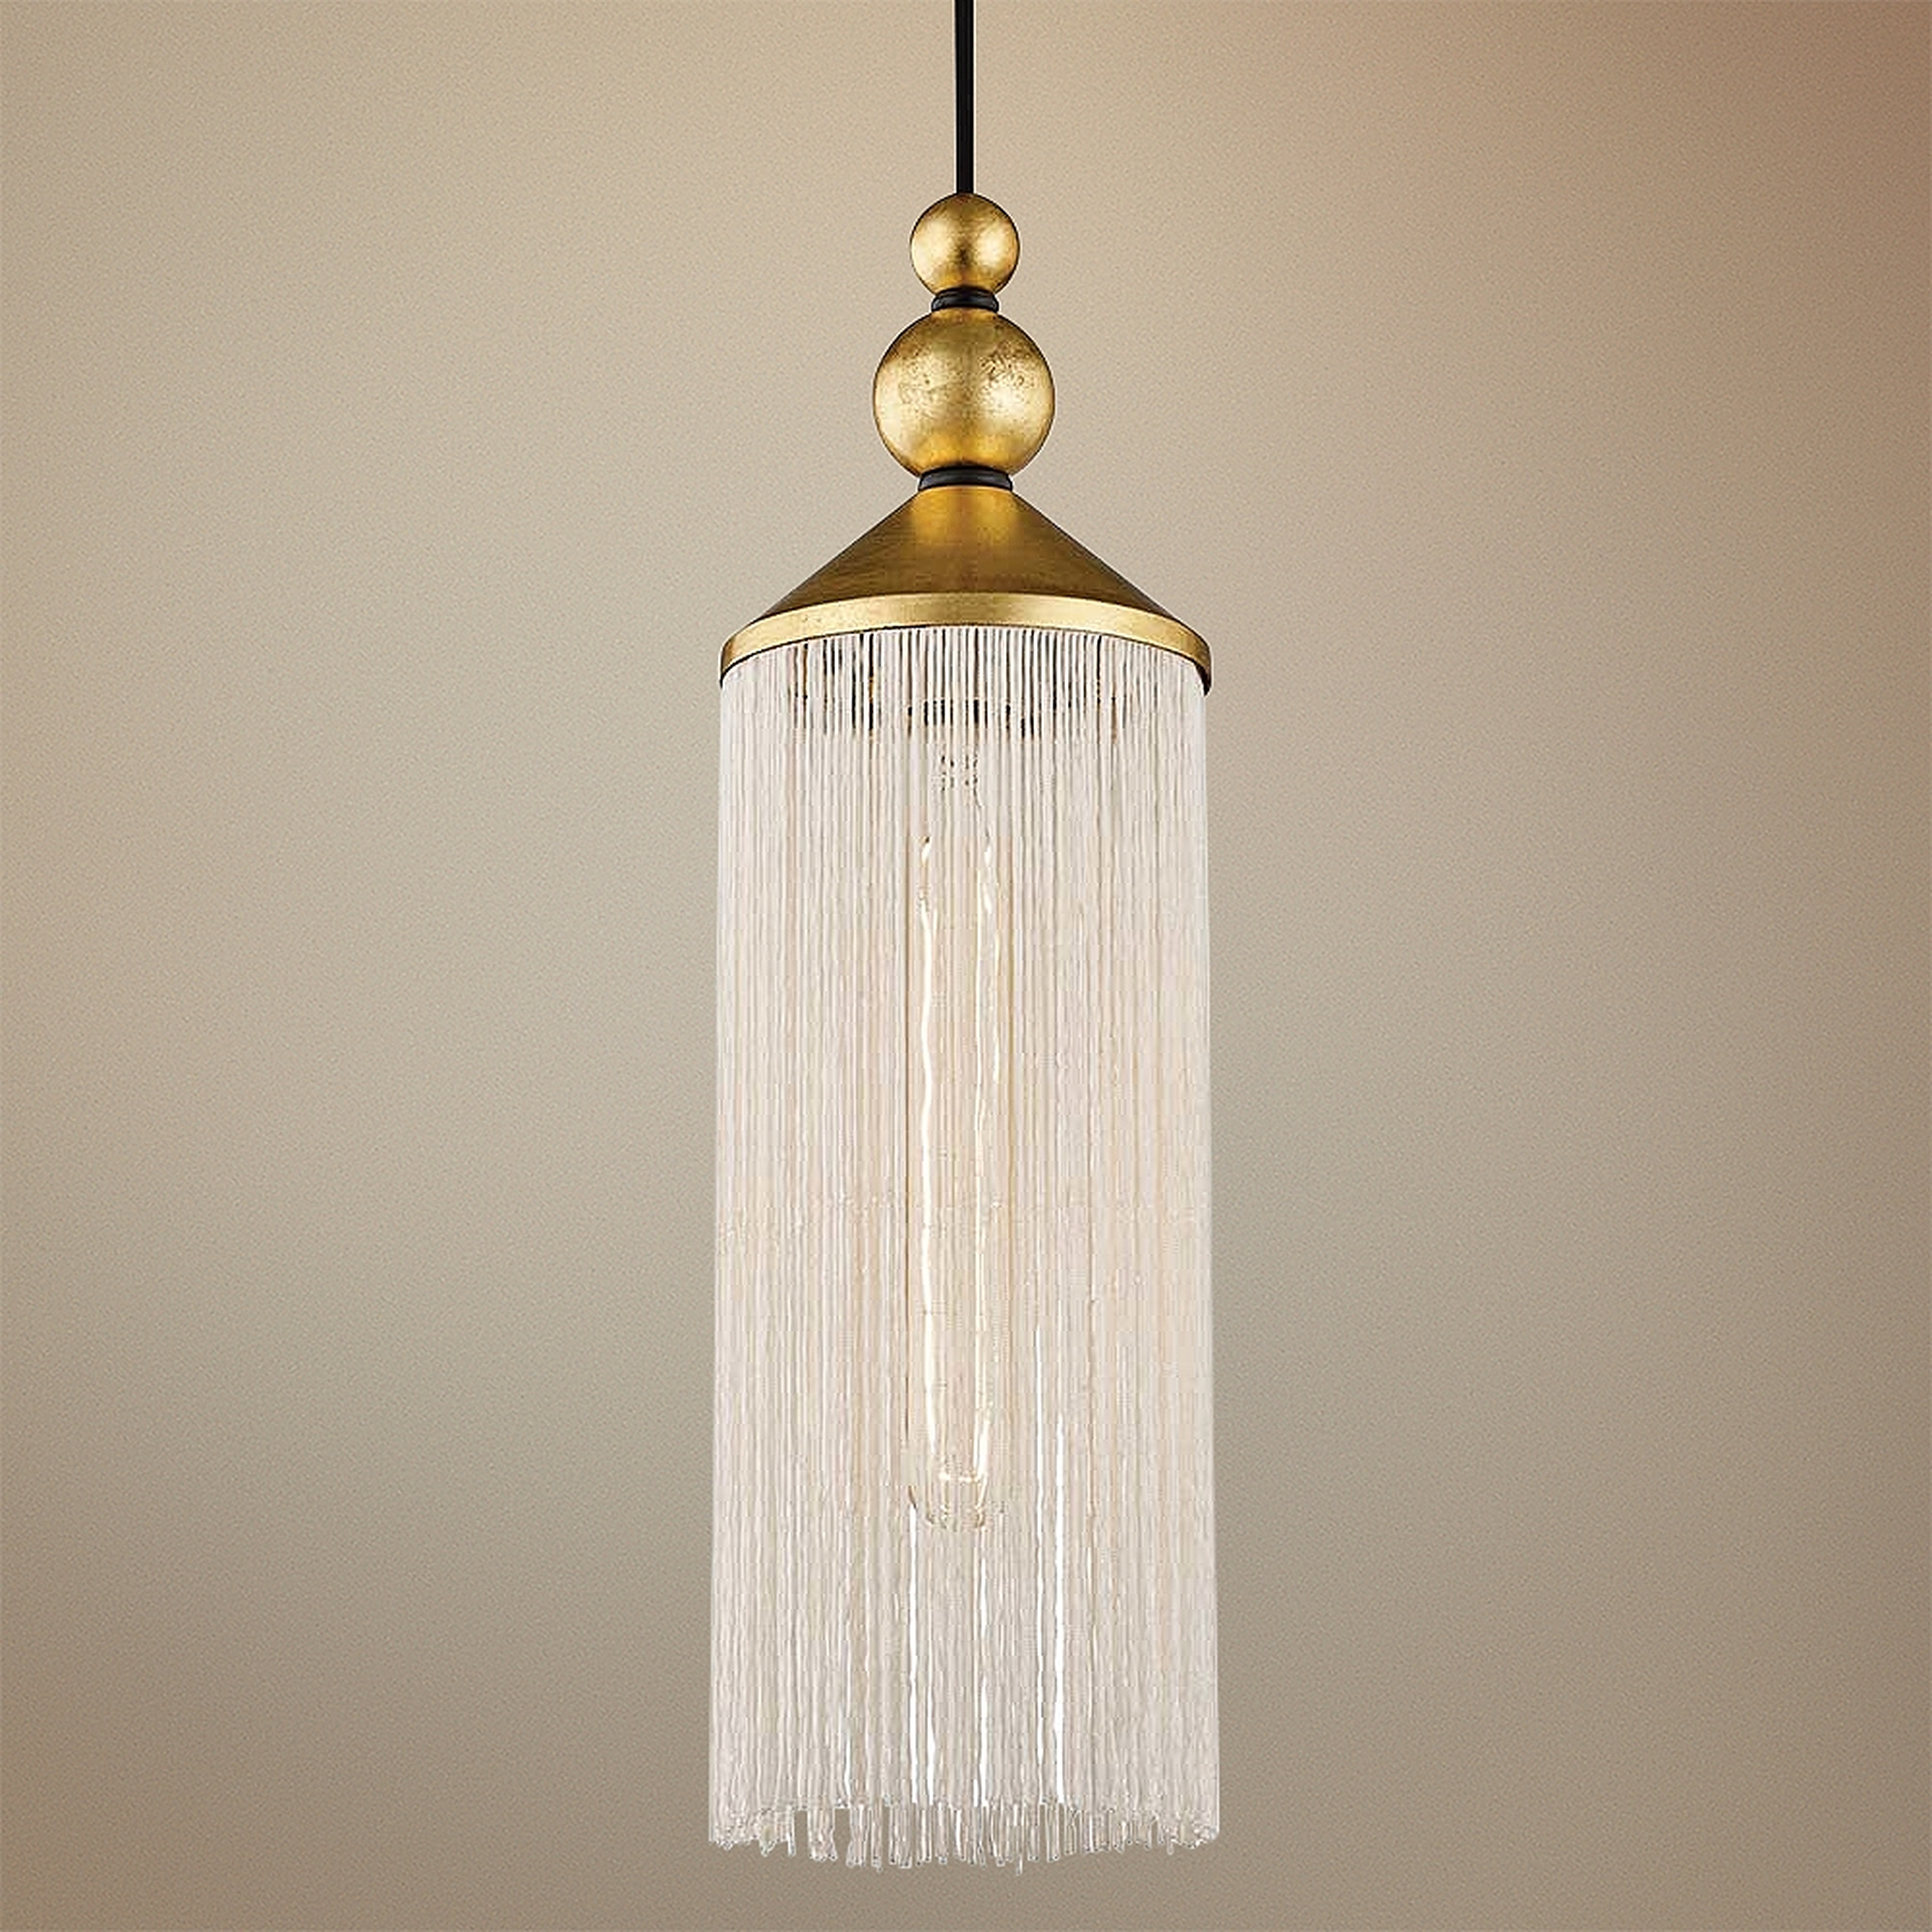 Mitzi Scarlett 5" Wide Gold Leaf and White Mini Pendant - Style # 69V81 - Lamps Plus